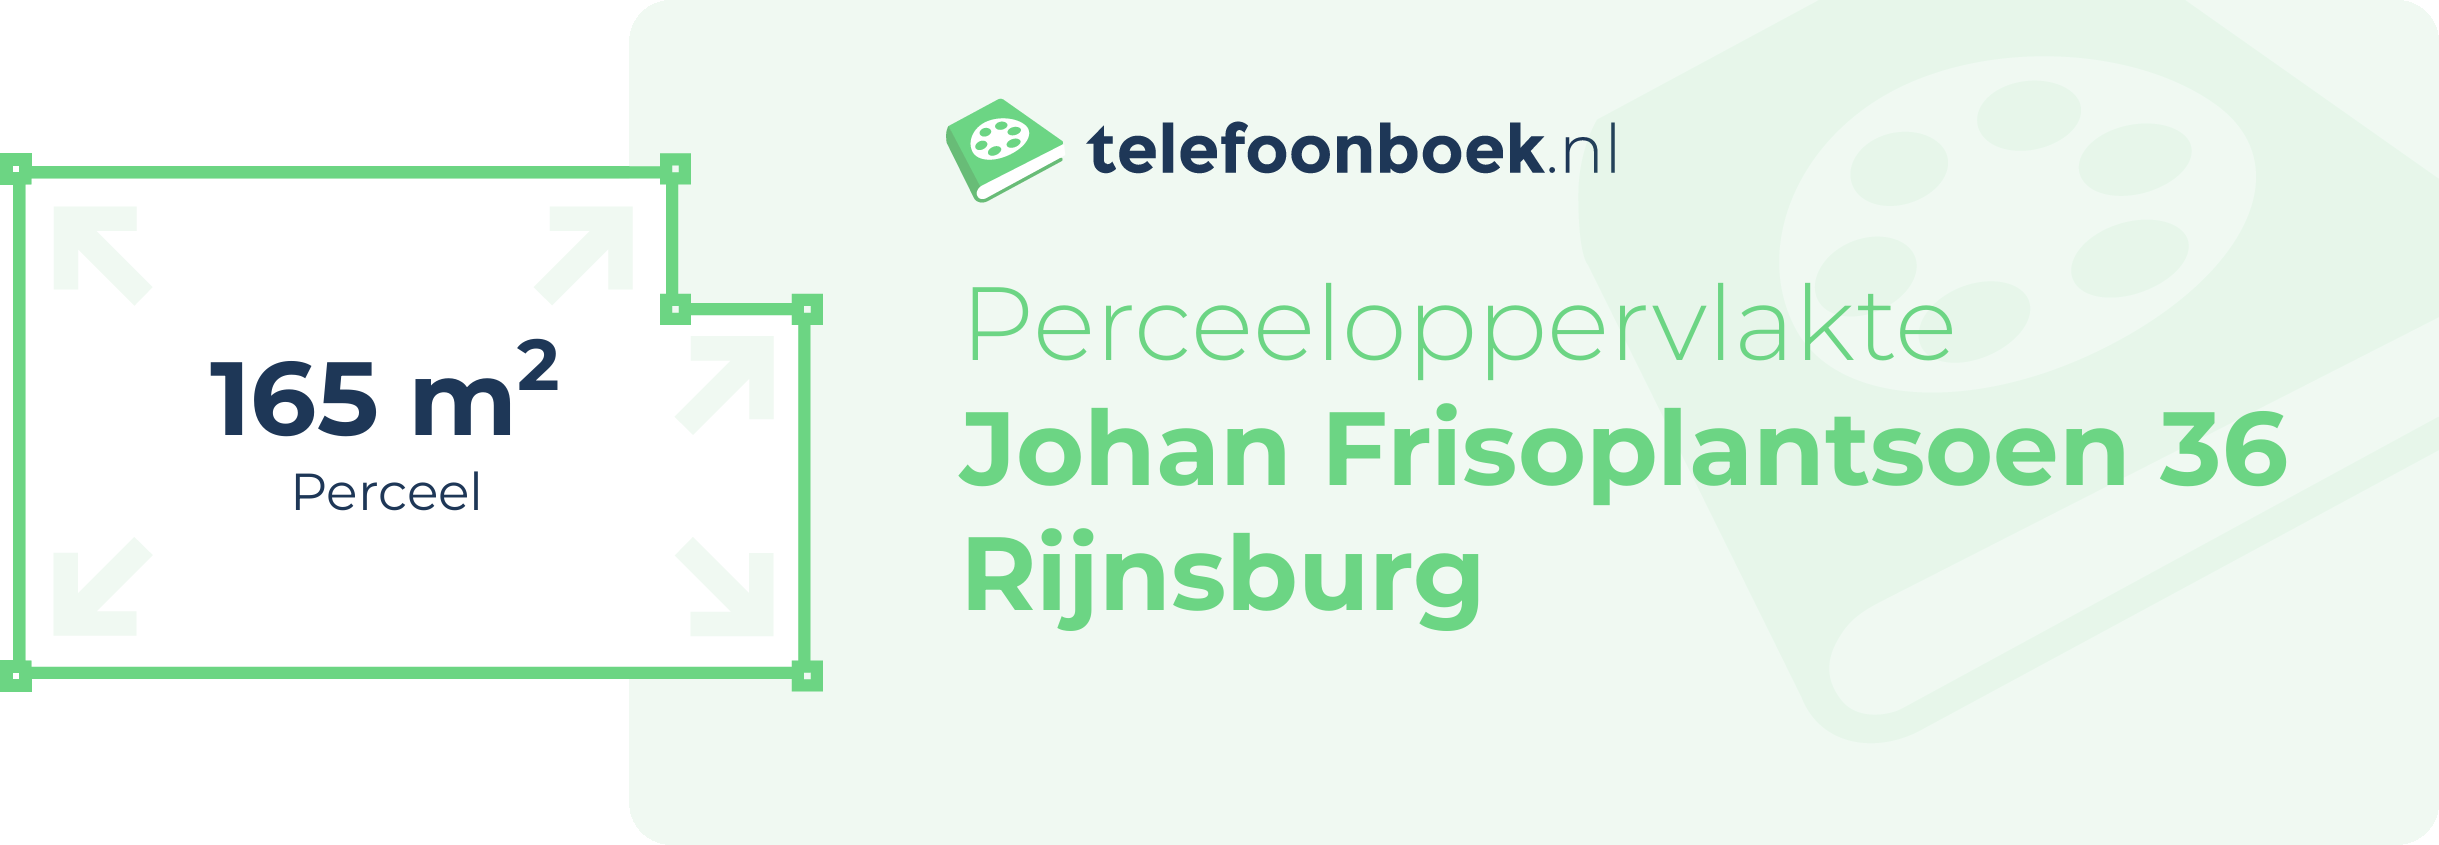 Perceeloppervlakte Johan Frisoplantsoen 36 Rijnsburg